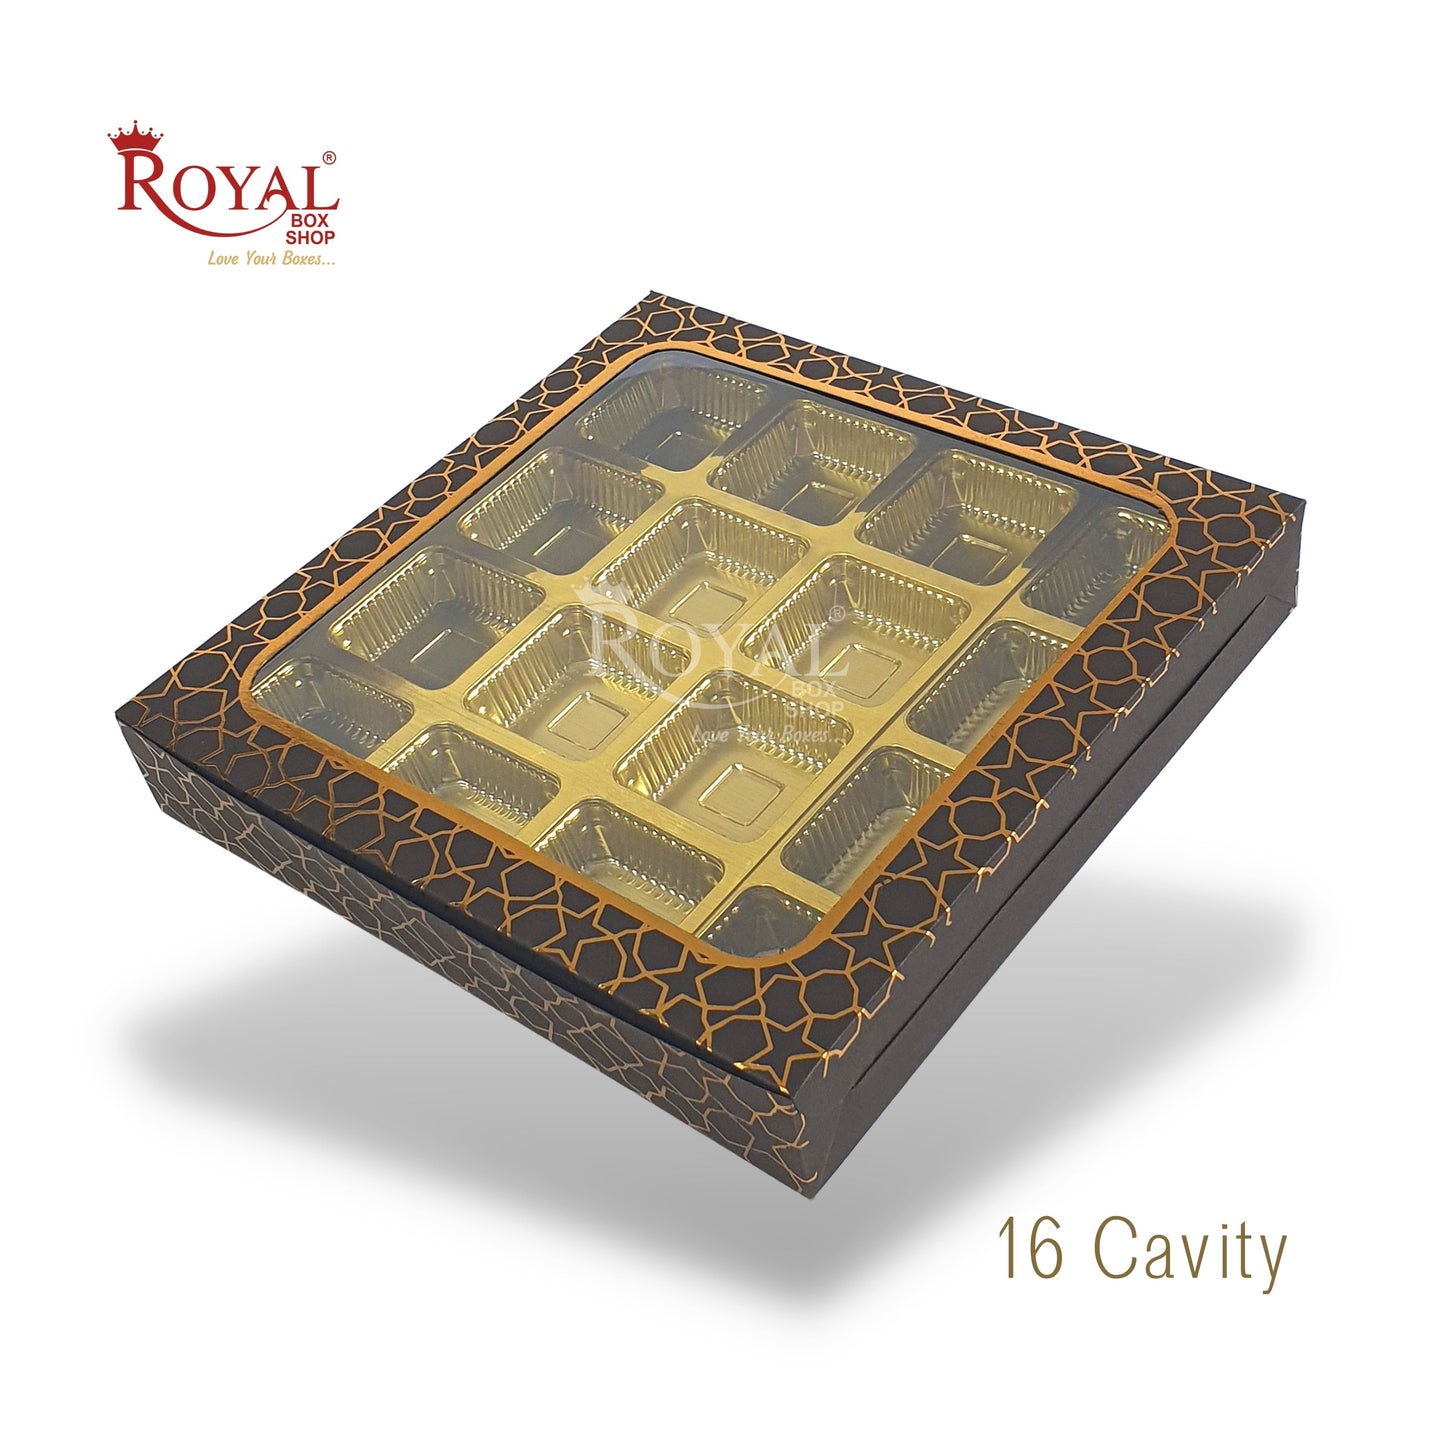 16 Cavity Chocolate Boxes - 7.5 x 7.5 x 1.25 inches - Hexa Golden Foiling - Black Royal Box Shop